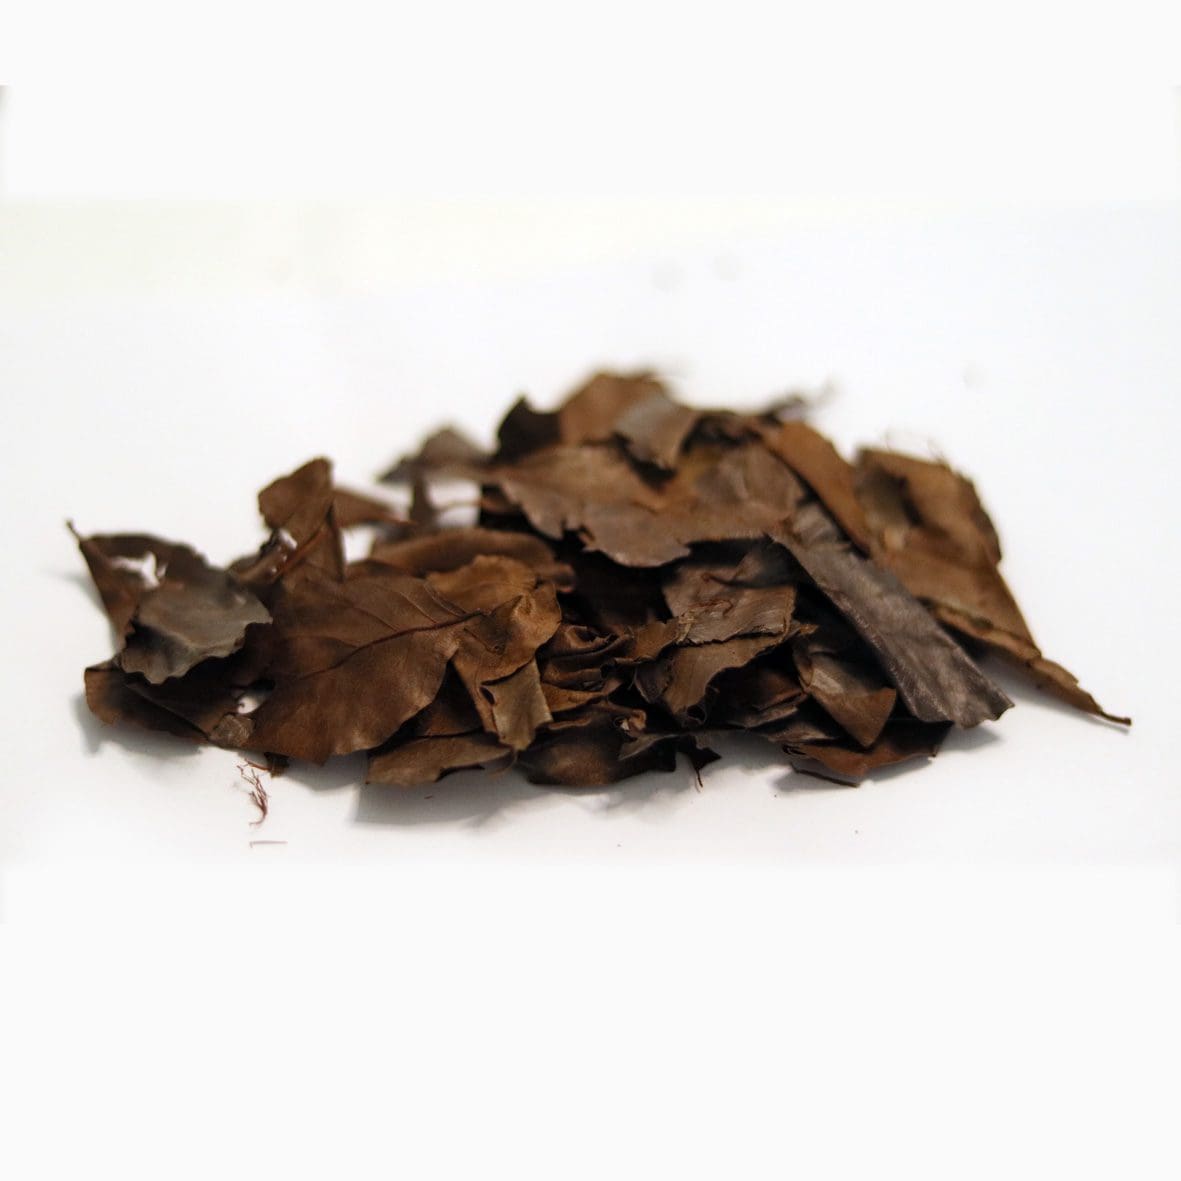 100% Natural Kenkeliba Leaf Tea - 50g